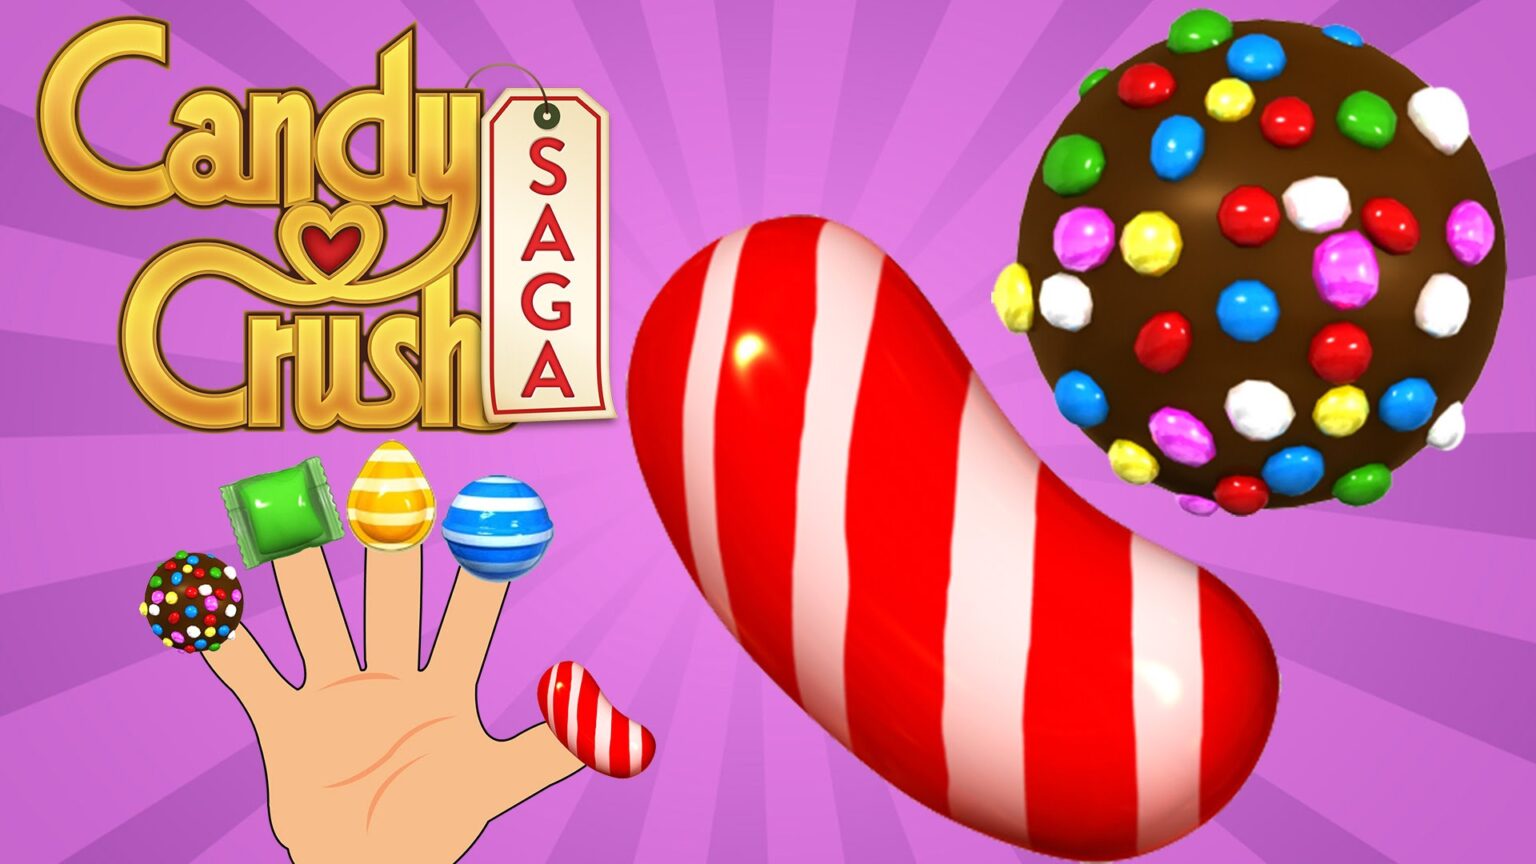 2. "Candy Crush Saga Inspired Nail Designs" - wide 4